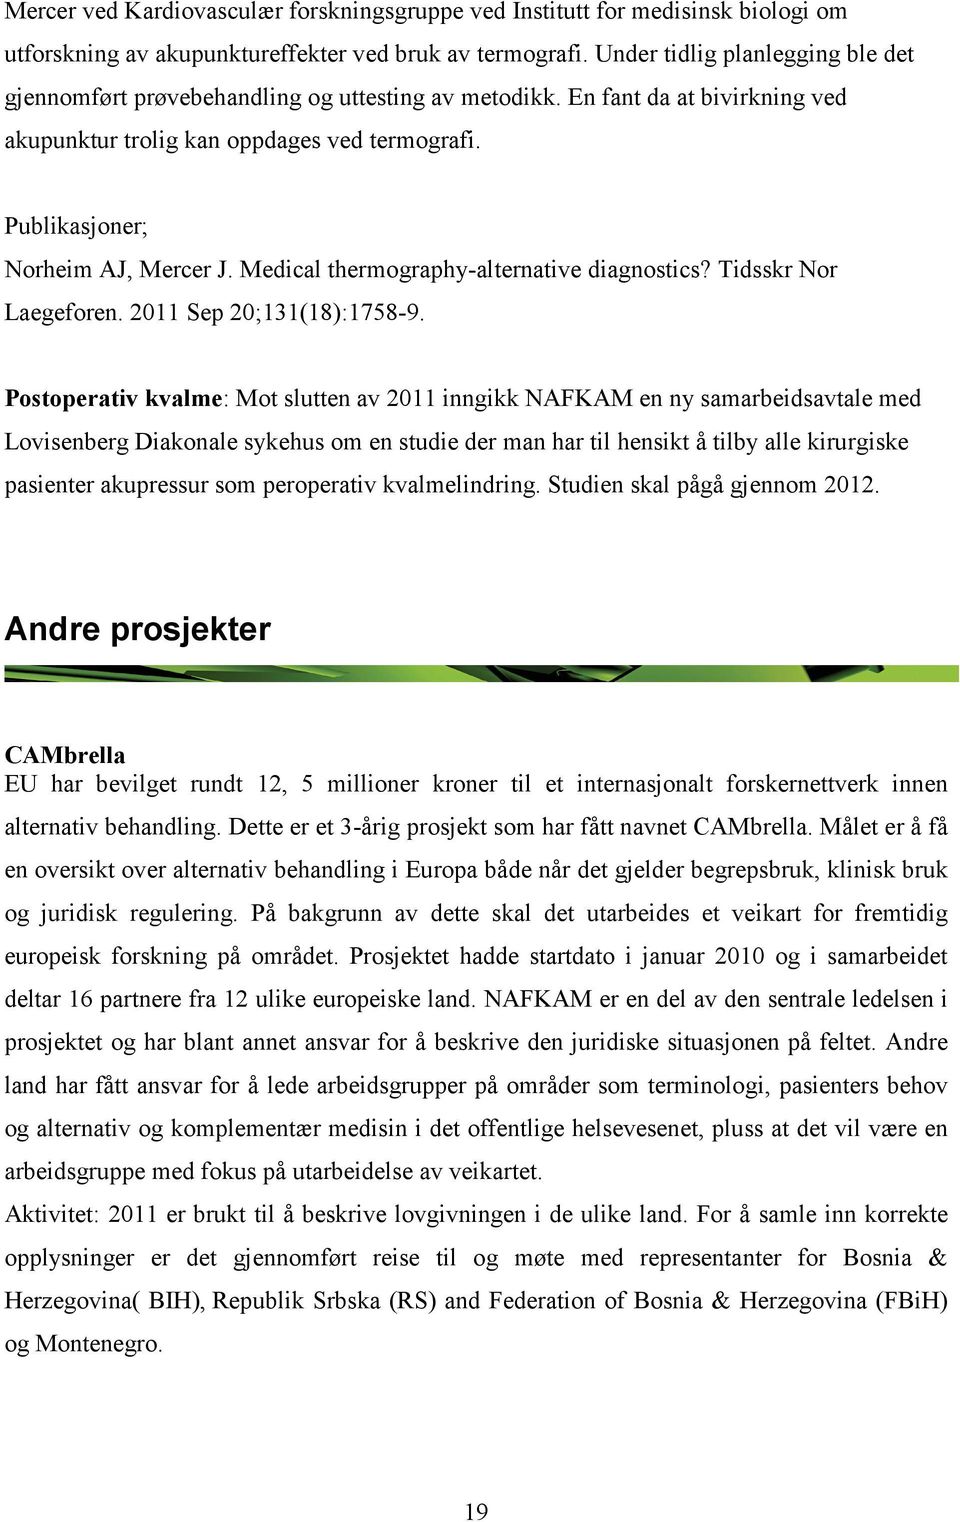 Medical thermography-alternative diagnostics? Tidsskr Nor Laegeforen. 2011 Sep 20;131(18):1758-9.